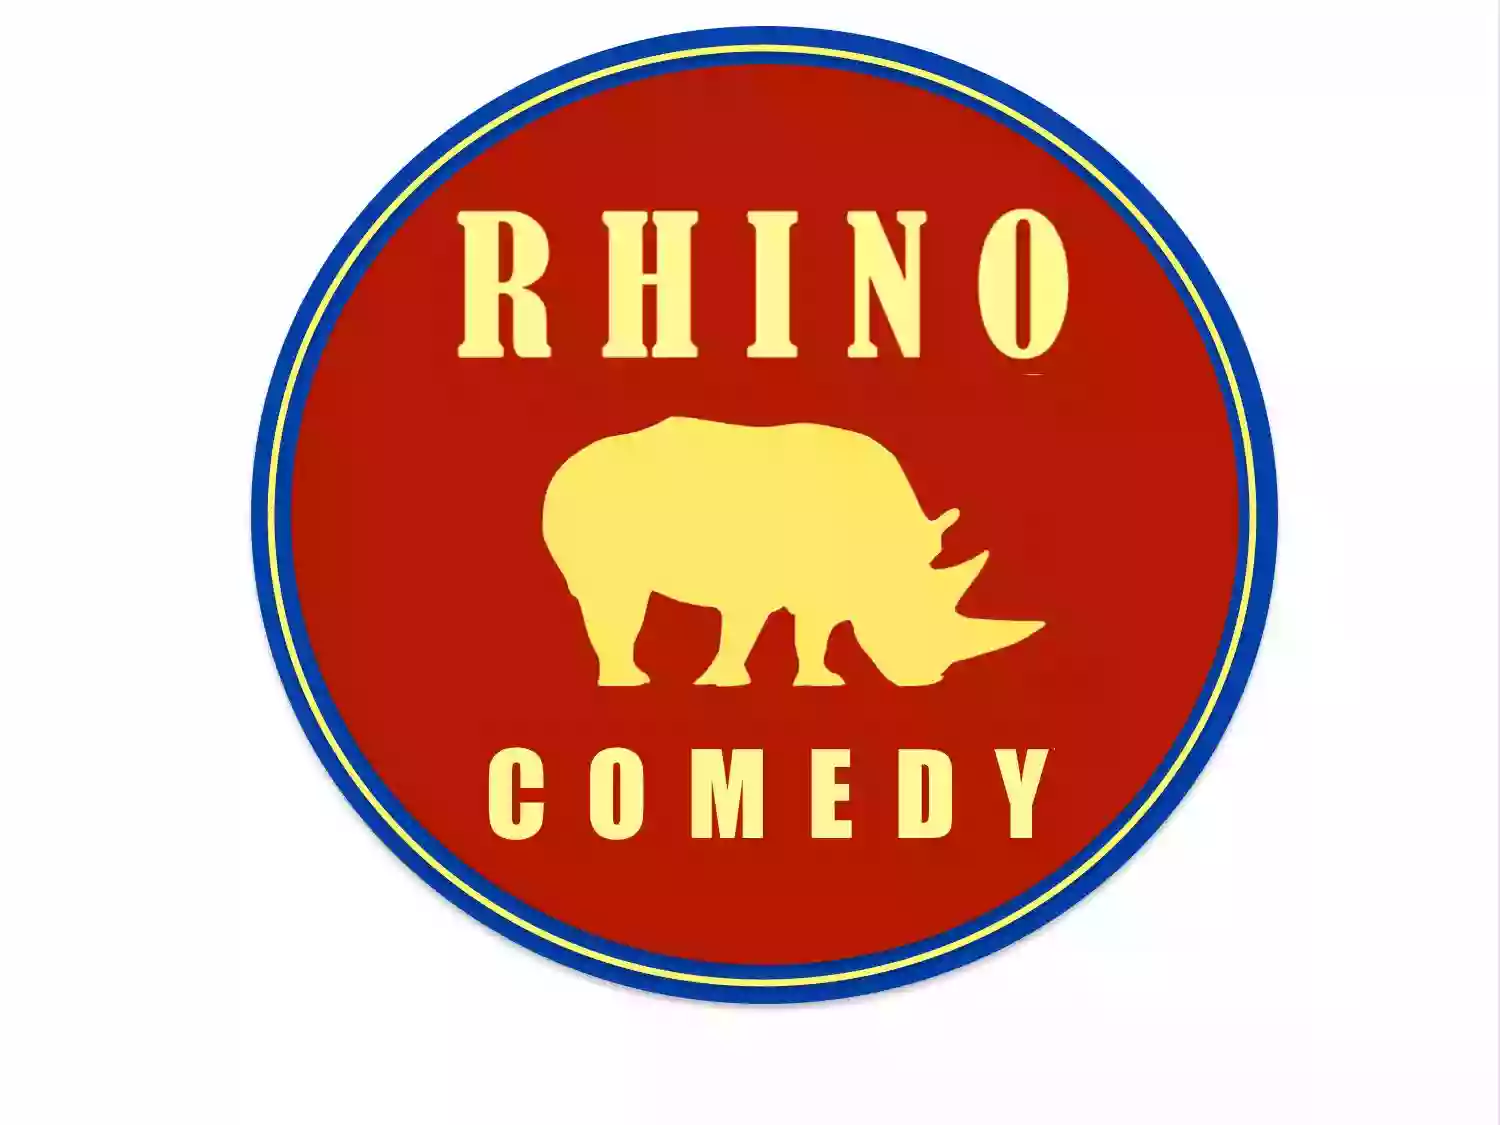 Rhino Comedy